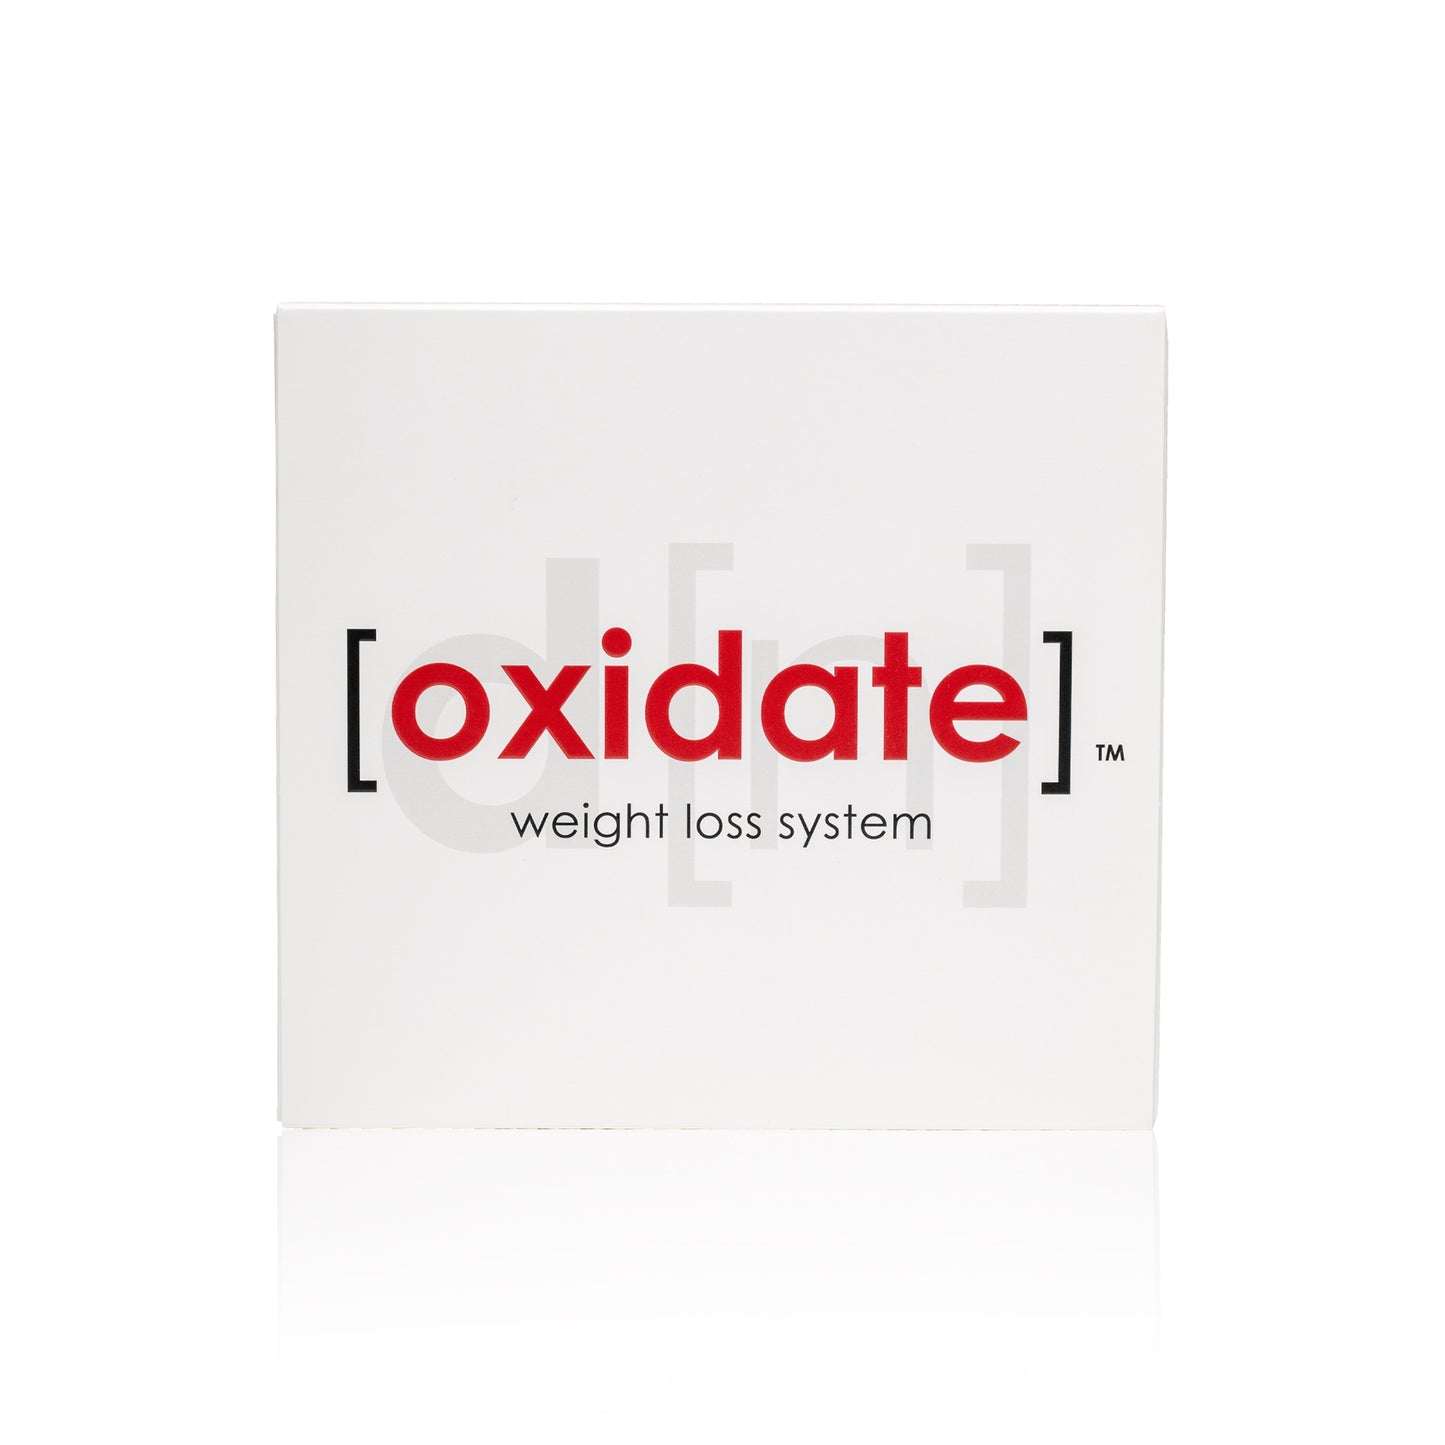 define[oxidate]